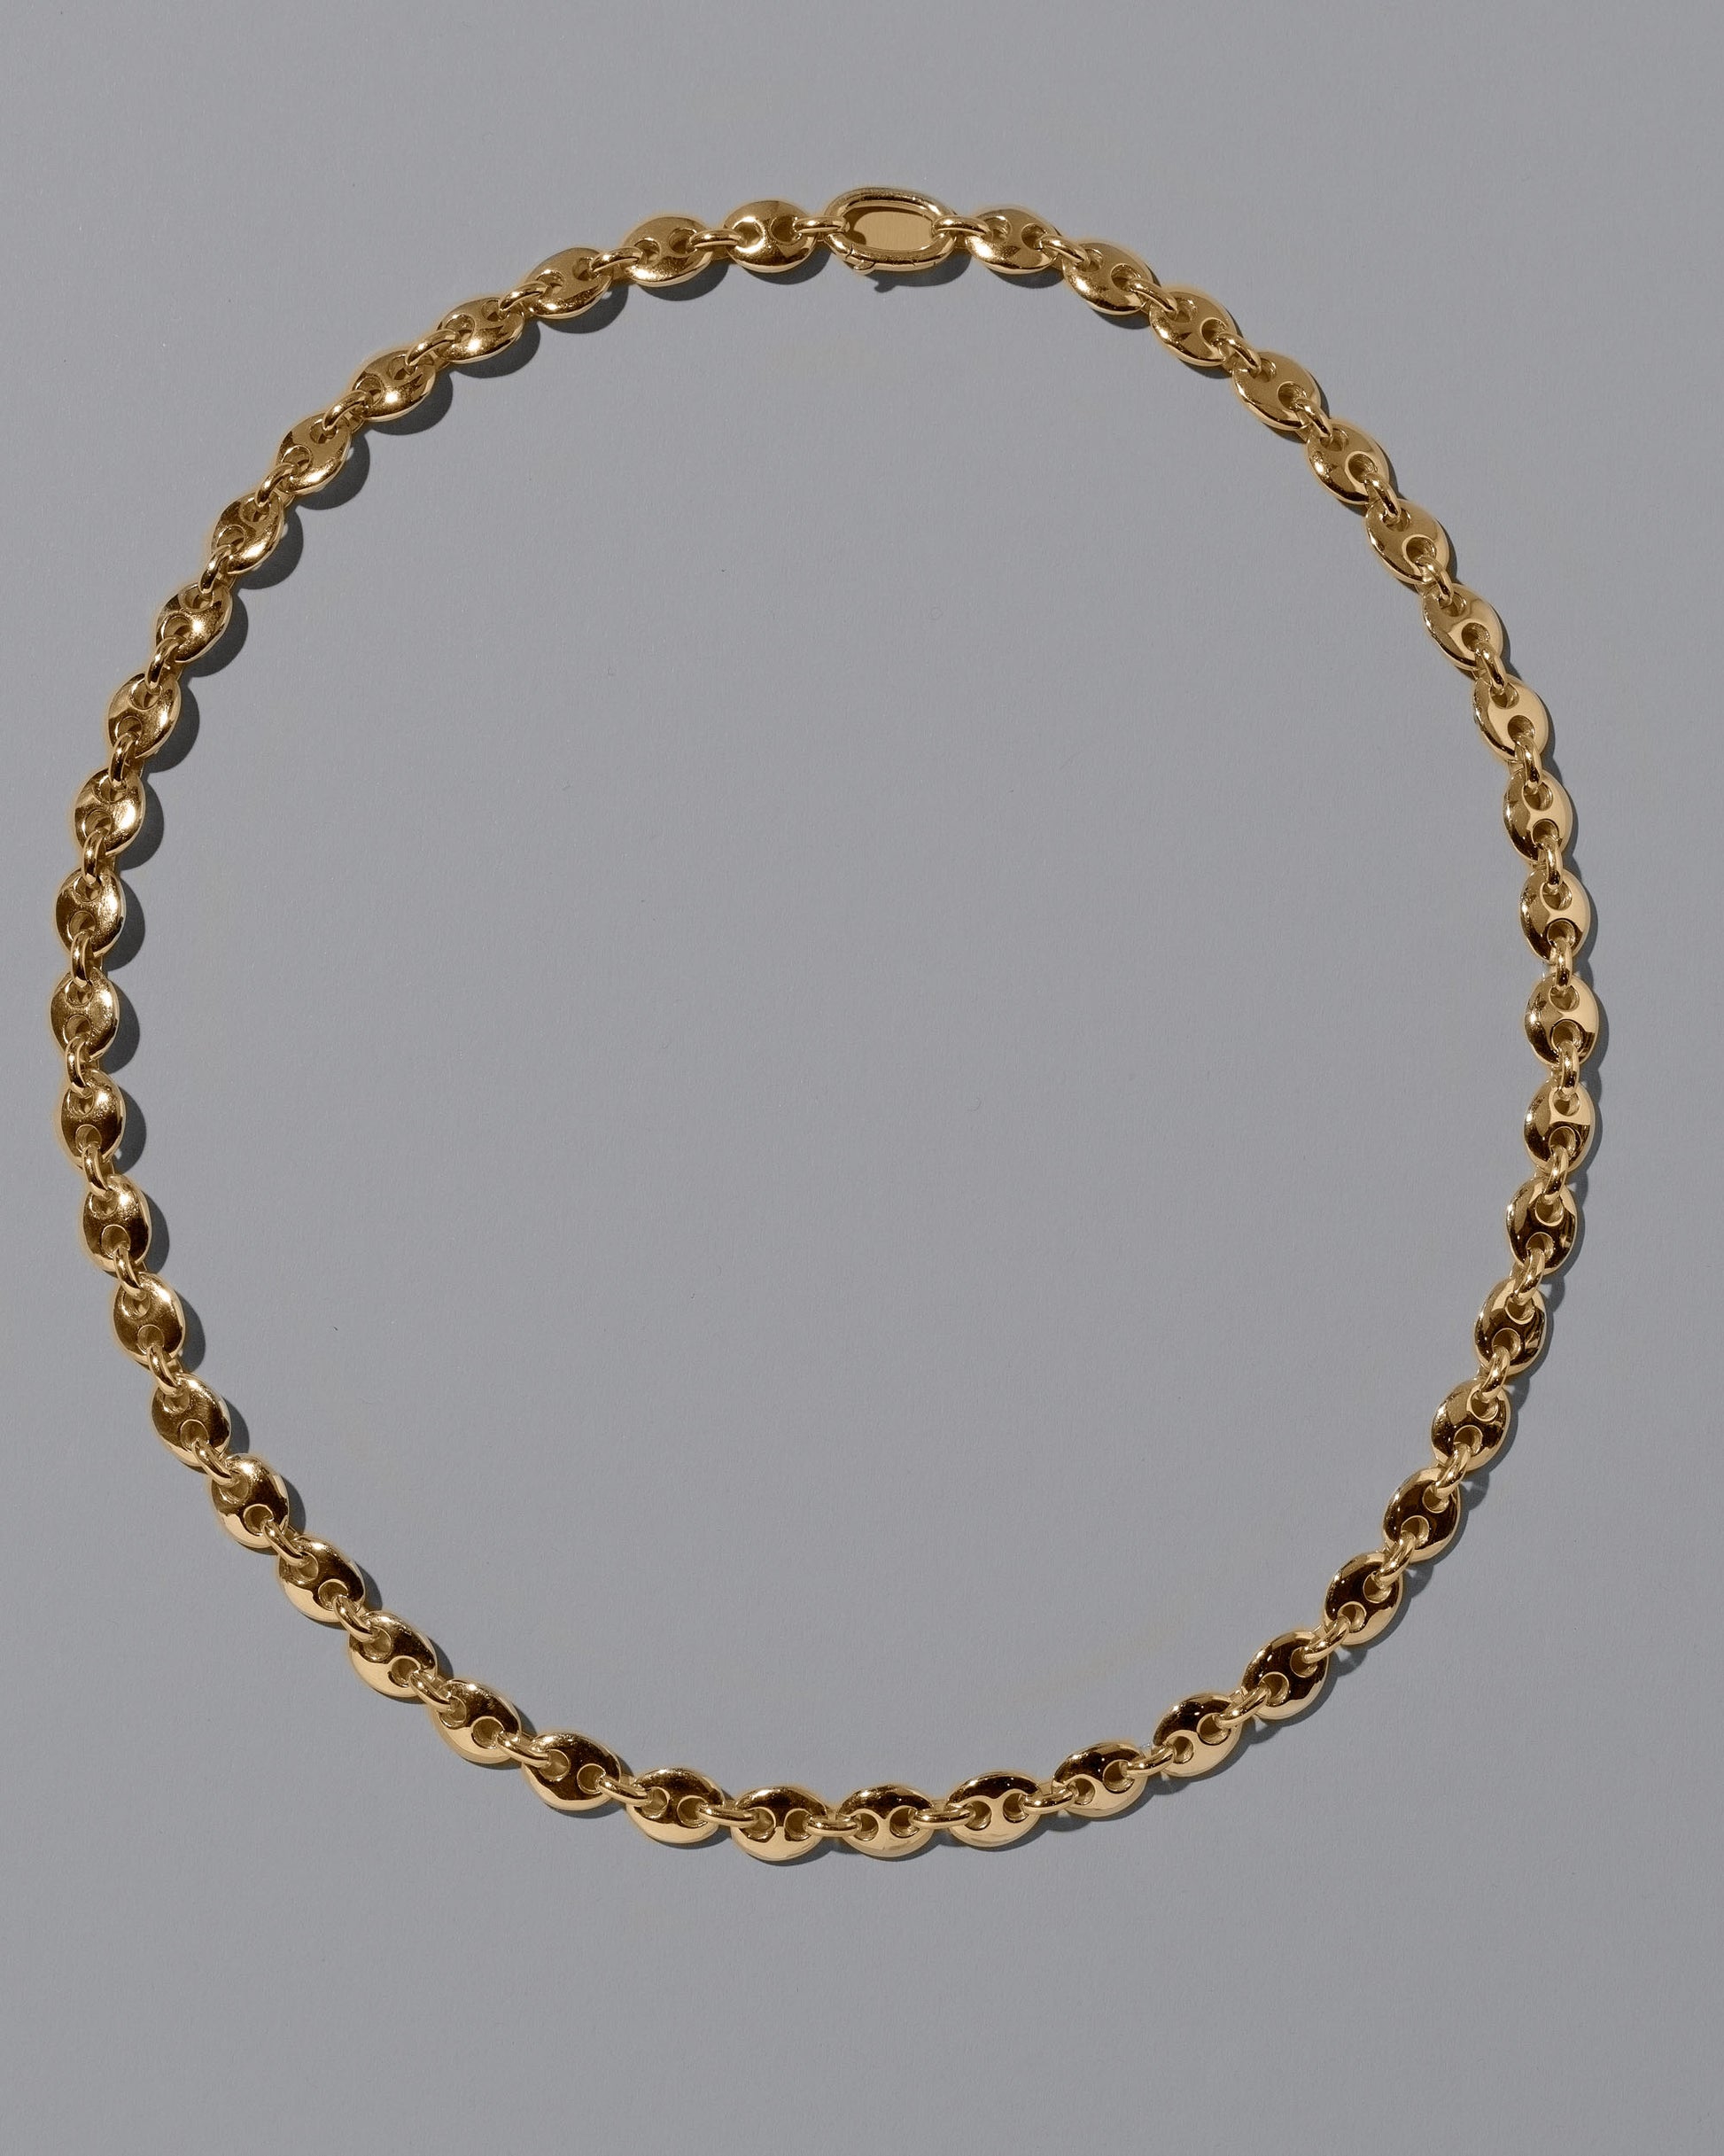 CRZM 22k Gold Mini Bedrock Necklace on light color background.